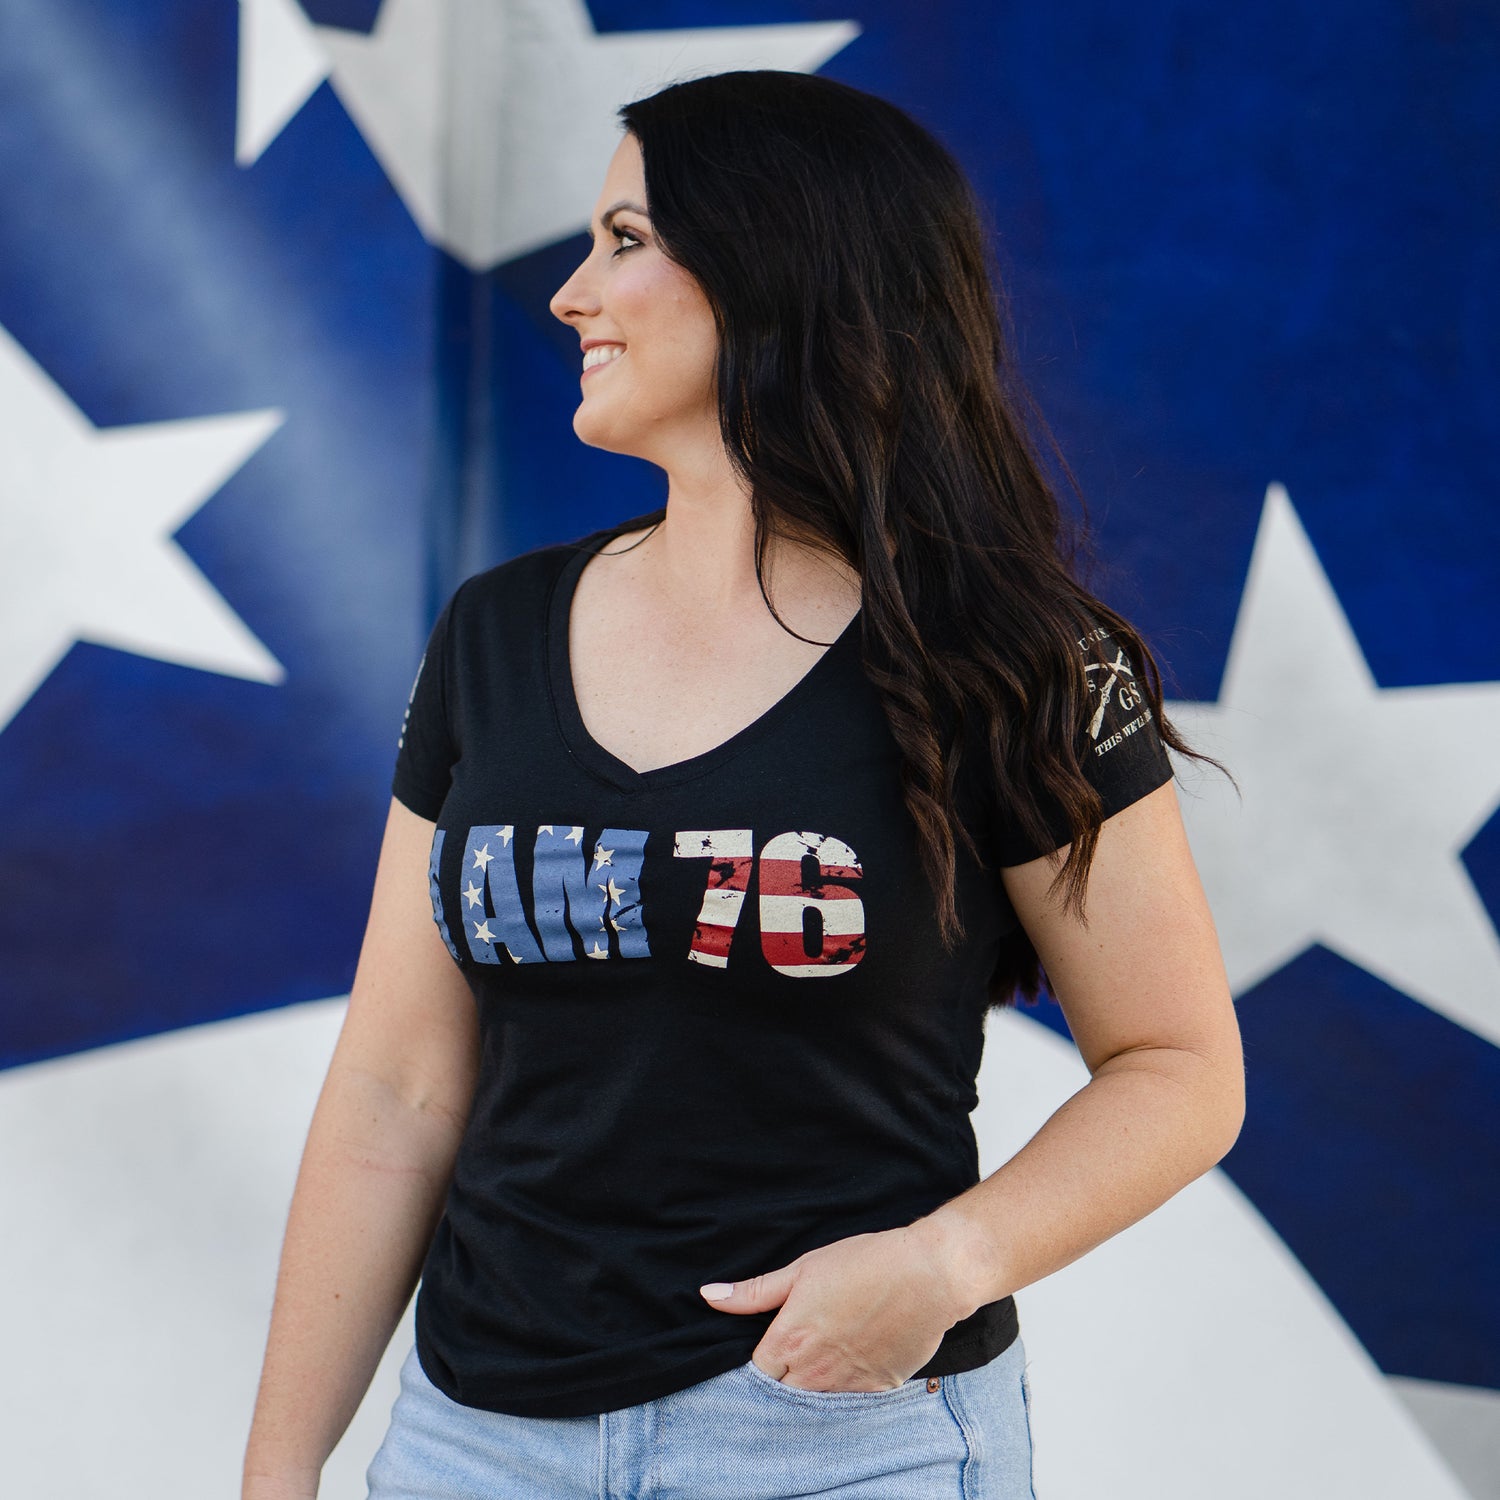 Women's Patriotic T-Shirt - I am 76 V-Neck 